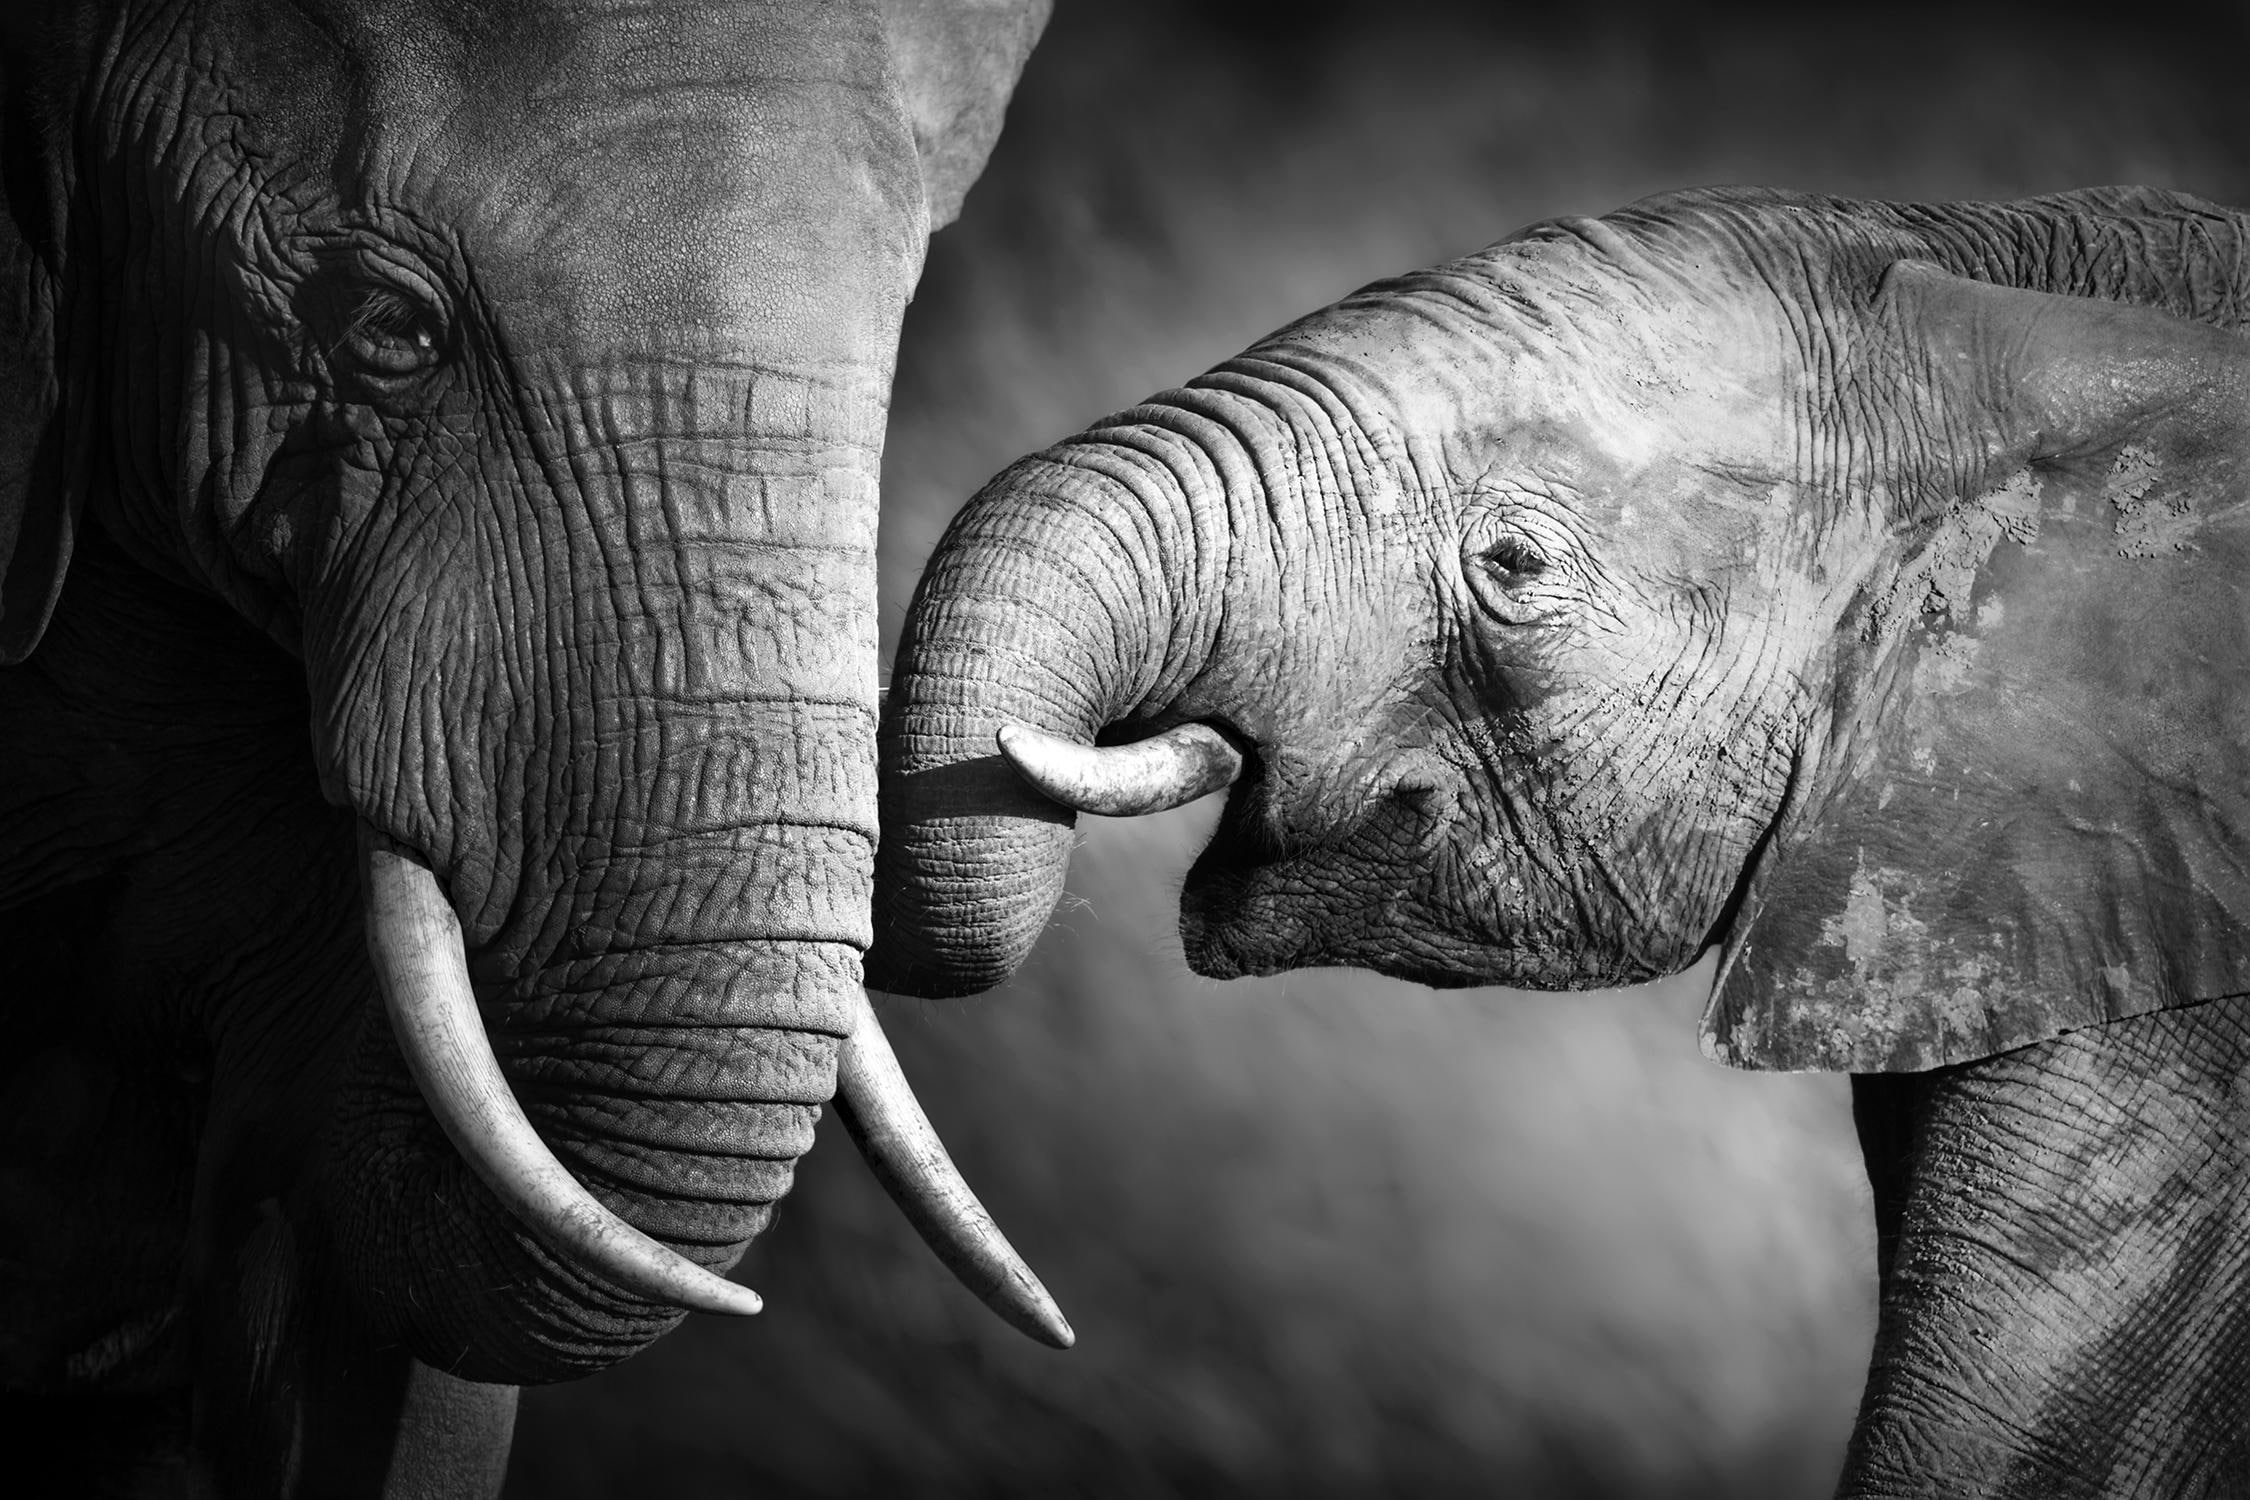 ❤ queence Leinwandbild »Elefant« entdecken im Jelmoli-Online Shop